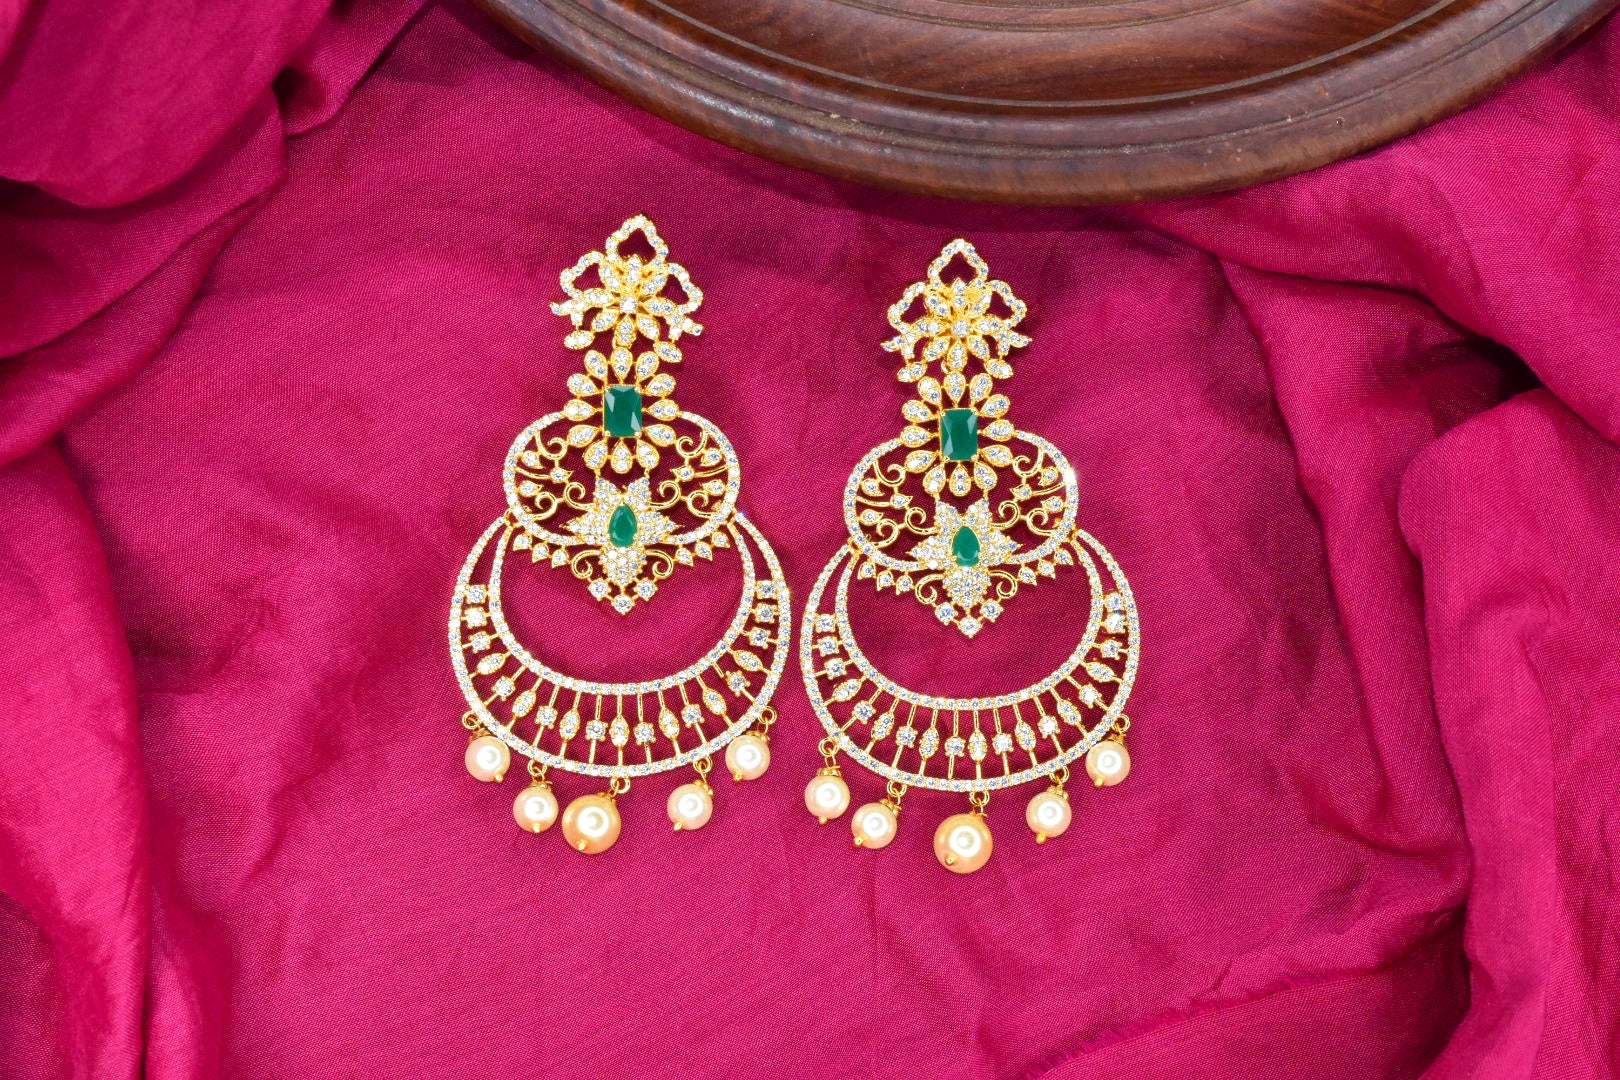 Cz Chandbali Earrings By Asp Fashion Jewellery